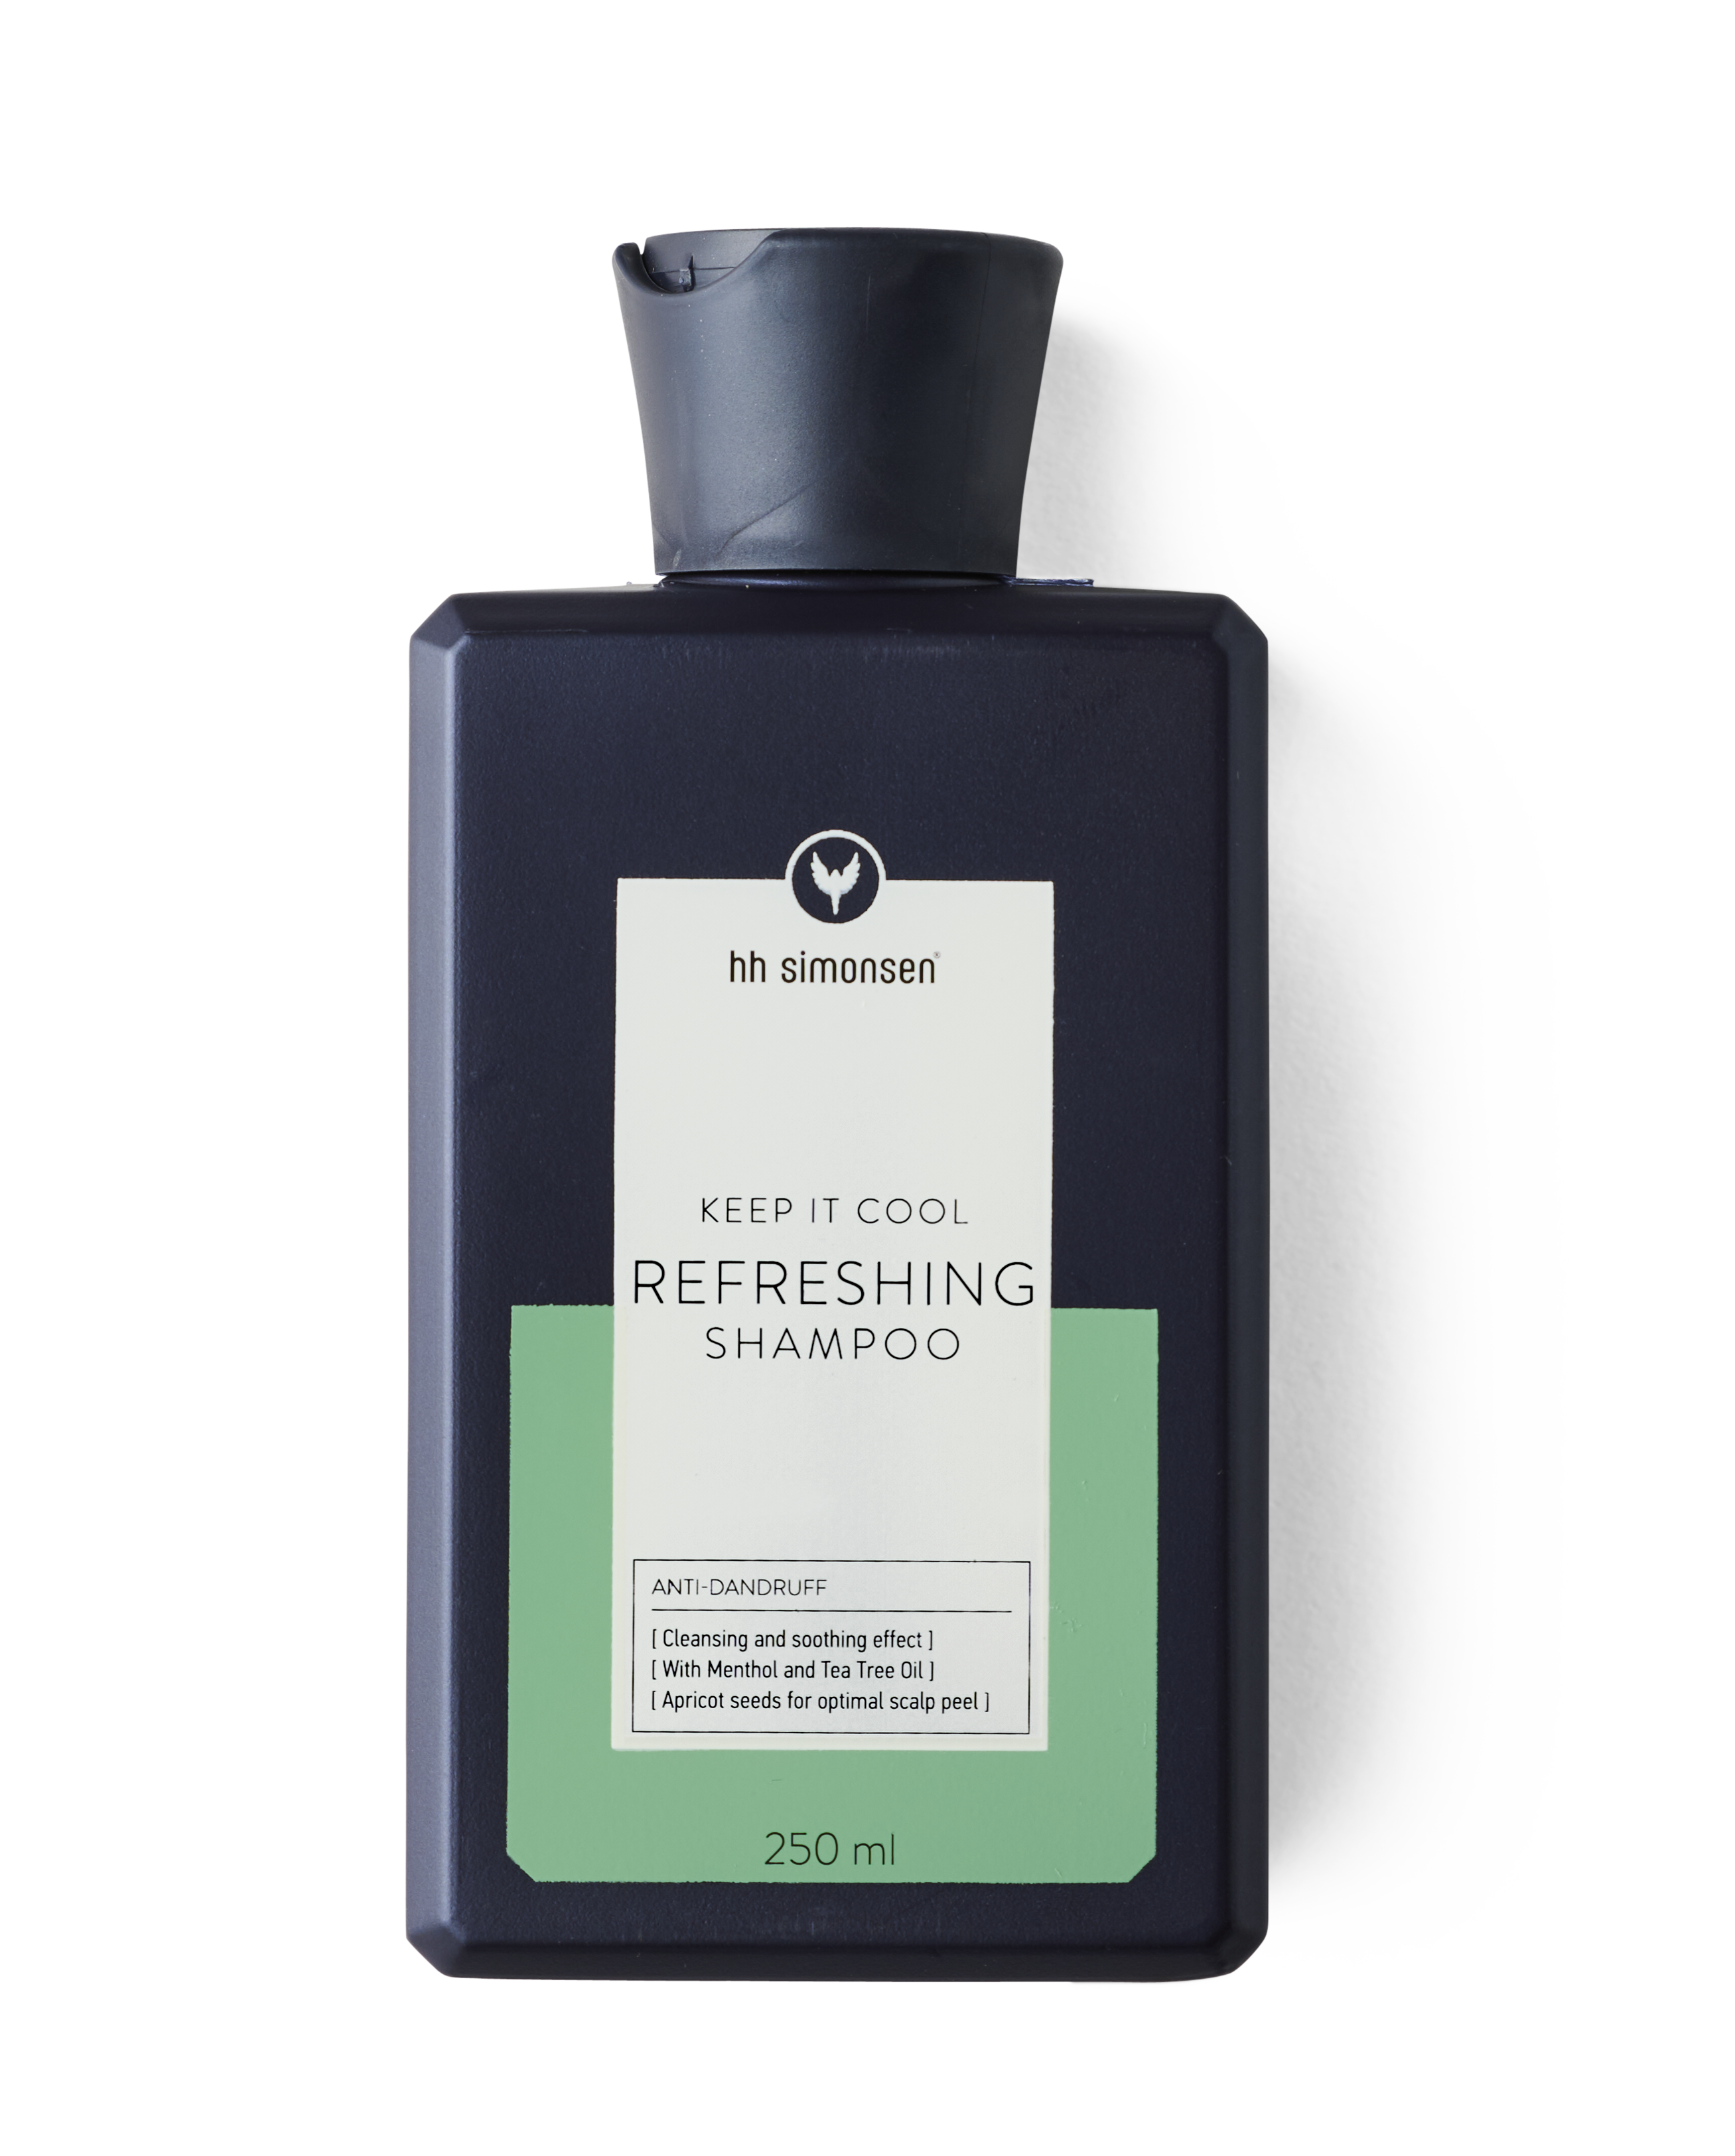 HH Simonsen Refreshing Shampoo, 250 ml.